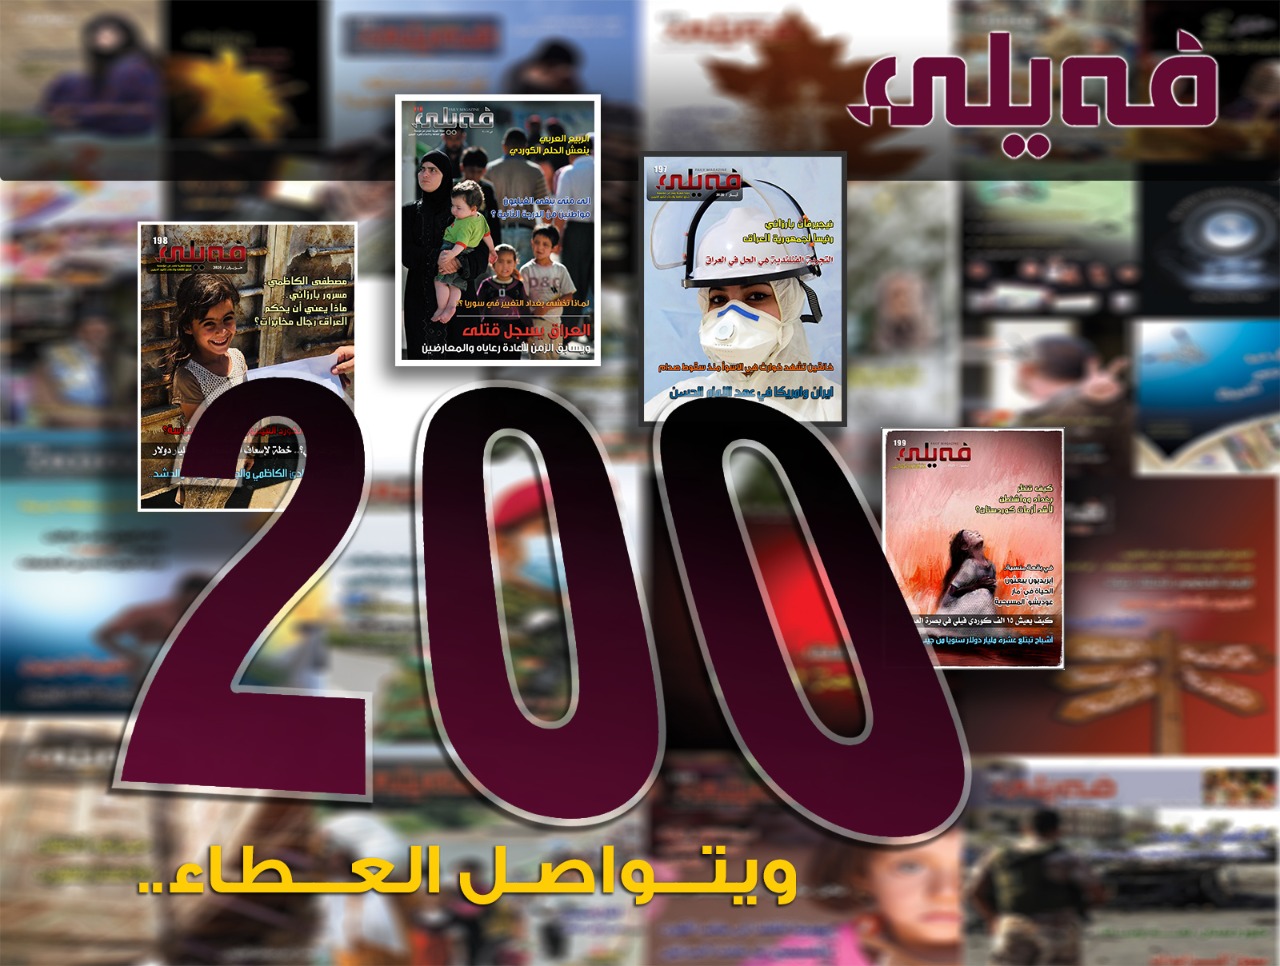 Feyli Magazine celebrates 200th issue